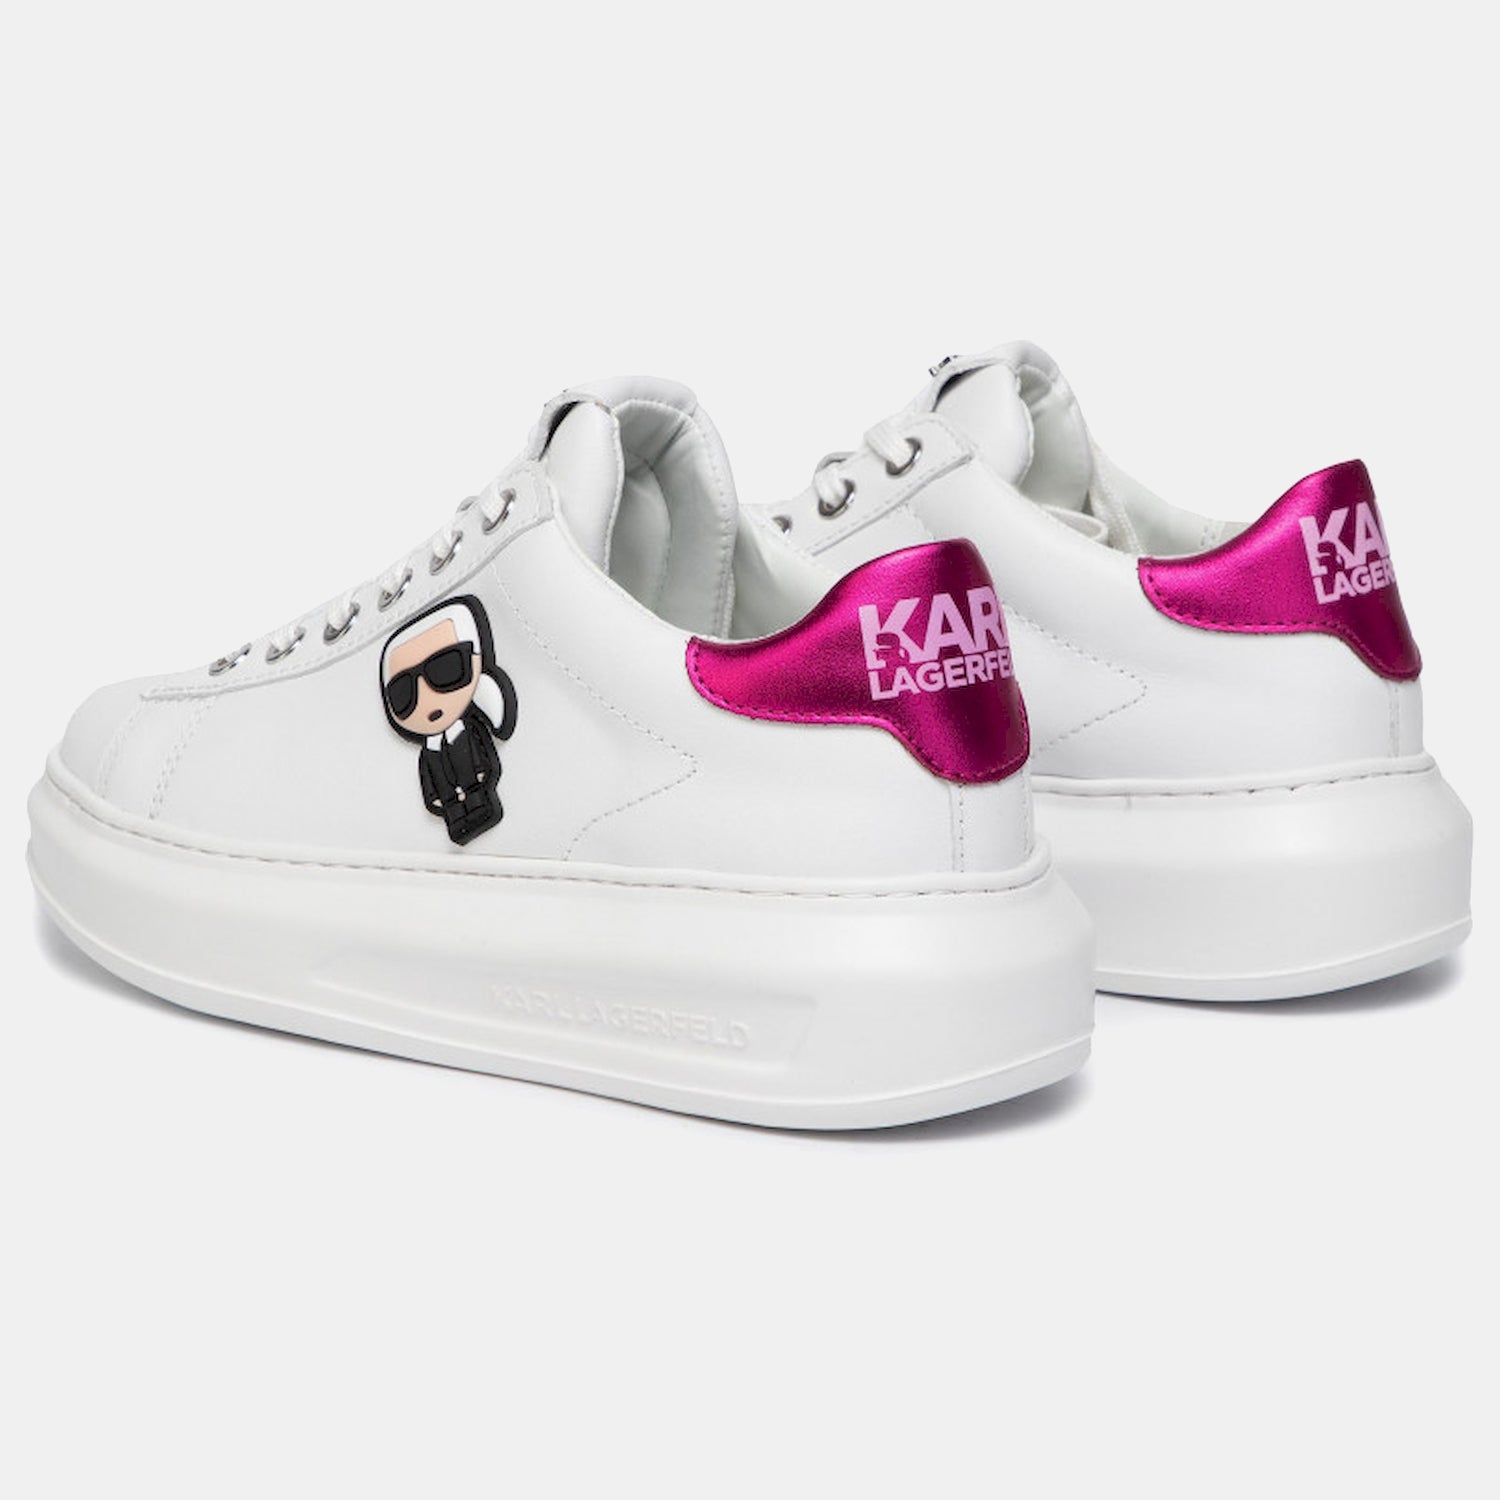 Karl Lagerfeld Sapatilhas Sneakers Shoes Kl62530 Whi Pink Branco Rosa_shot3